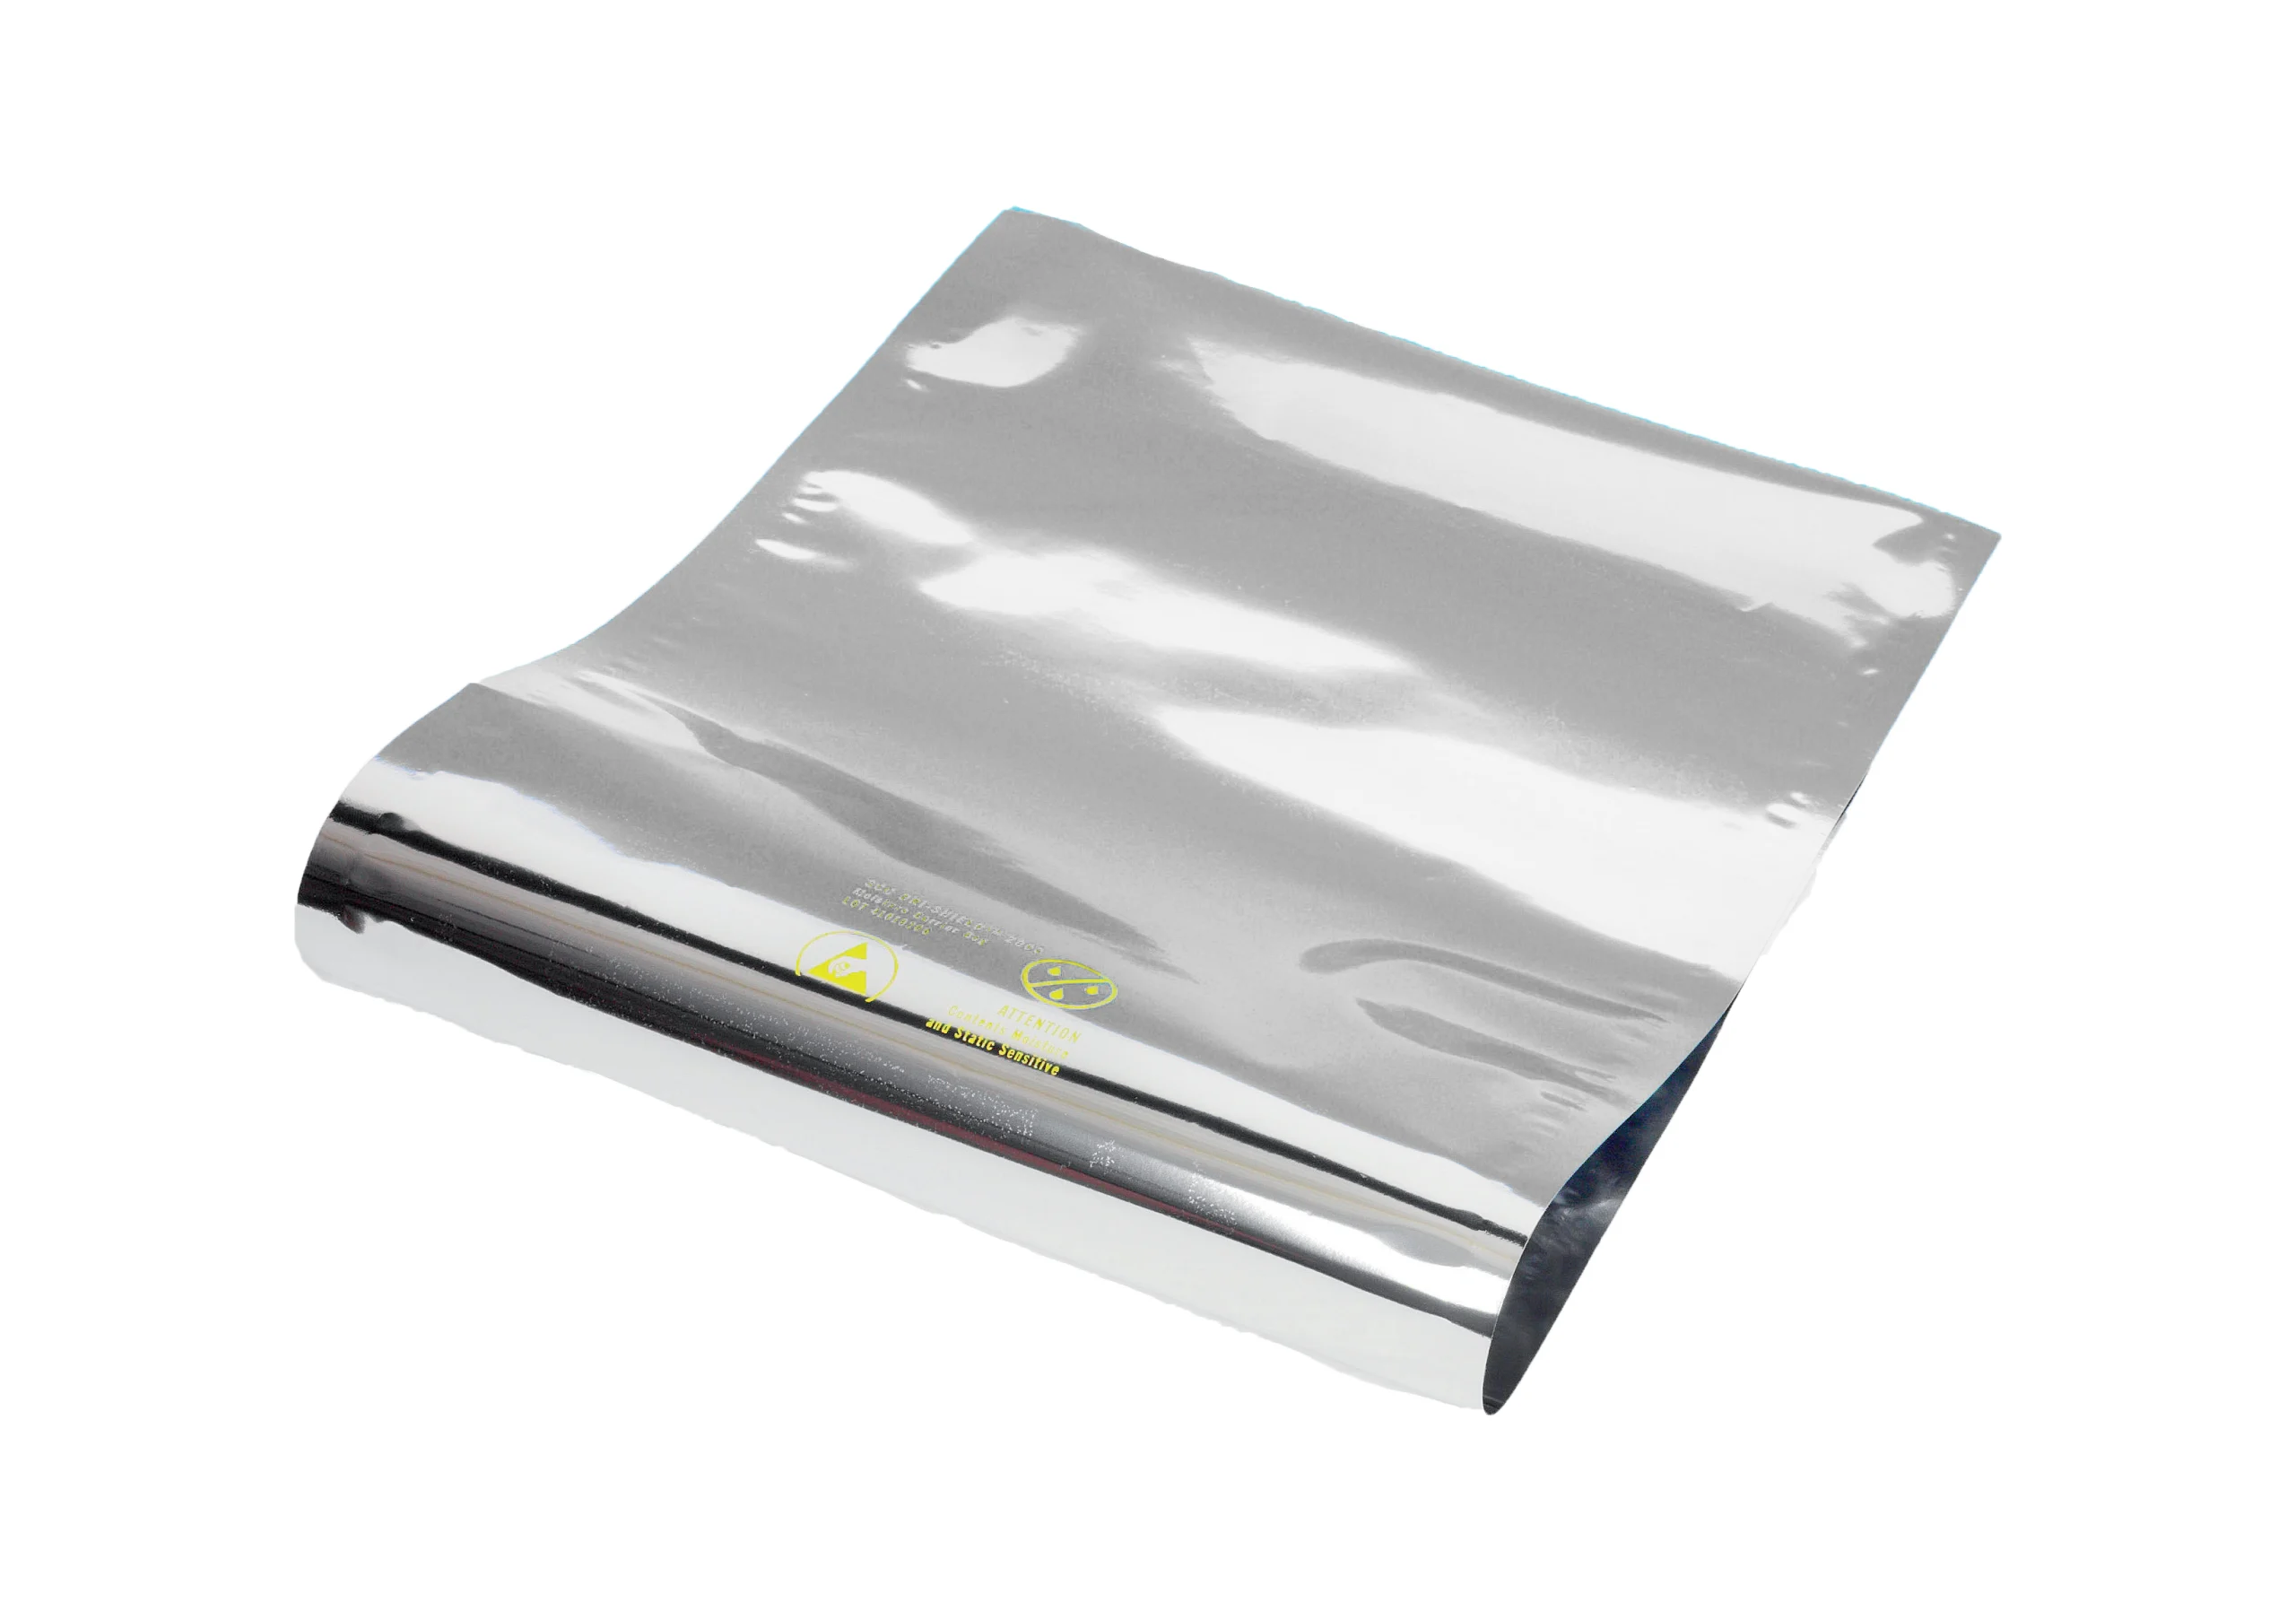 Moisture barrier bag for electrostatic and moisture protection from Bondline.